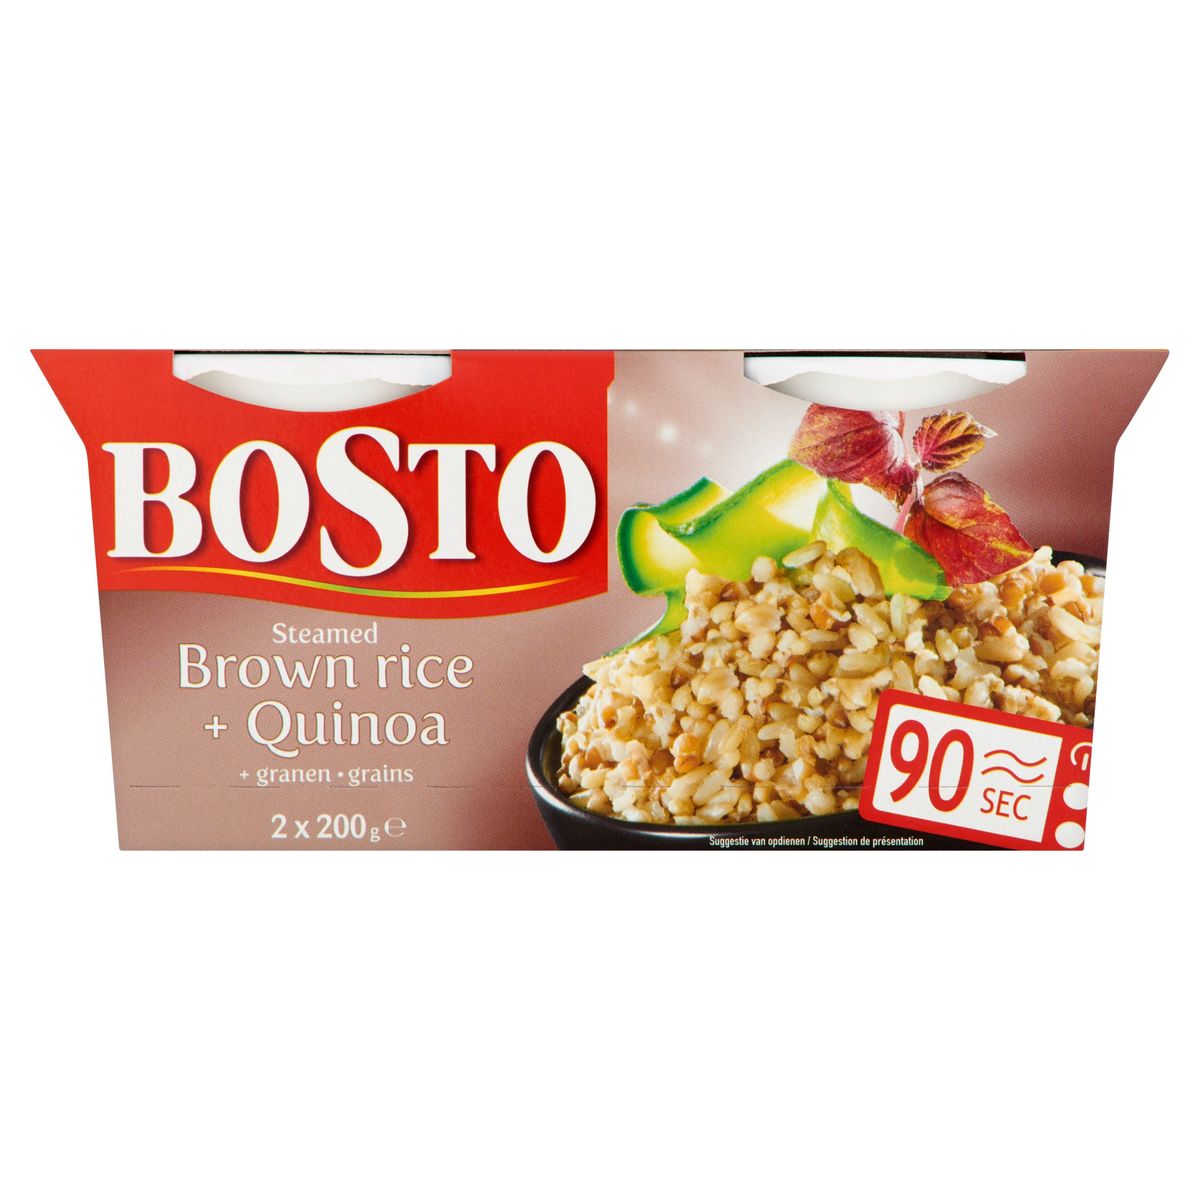 Bosto Steamed Brown Rice + Quinoa + Grains 2 x 200 g